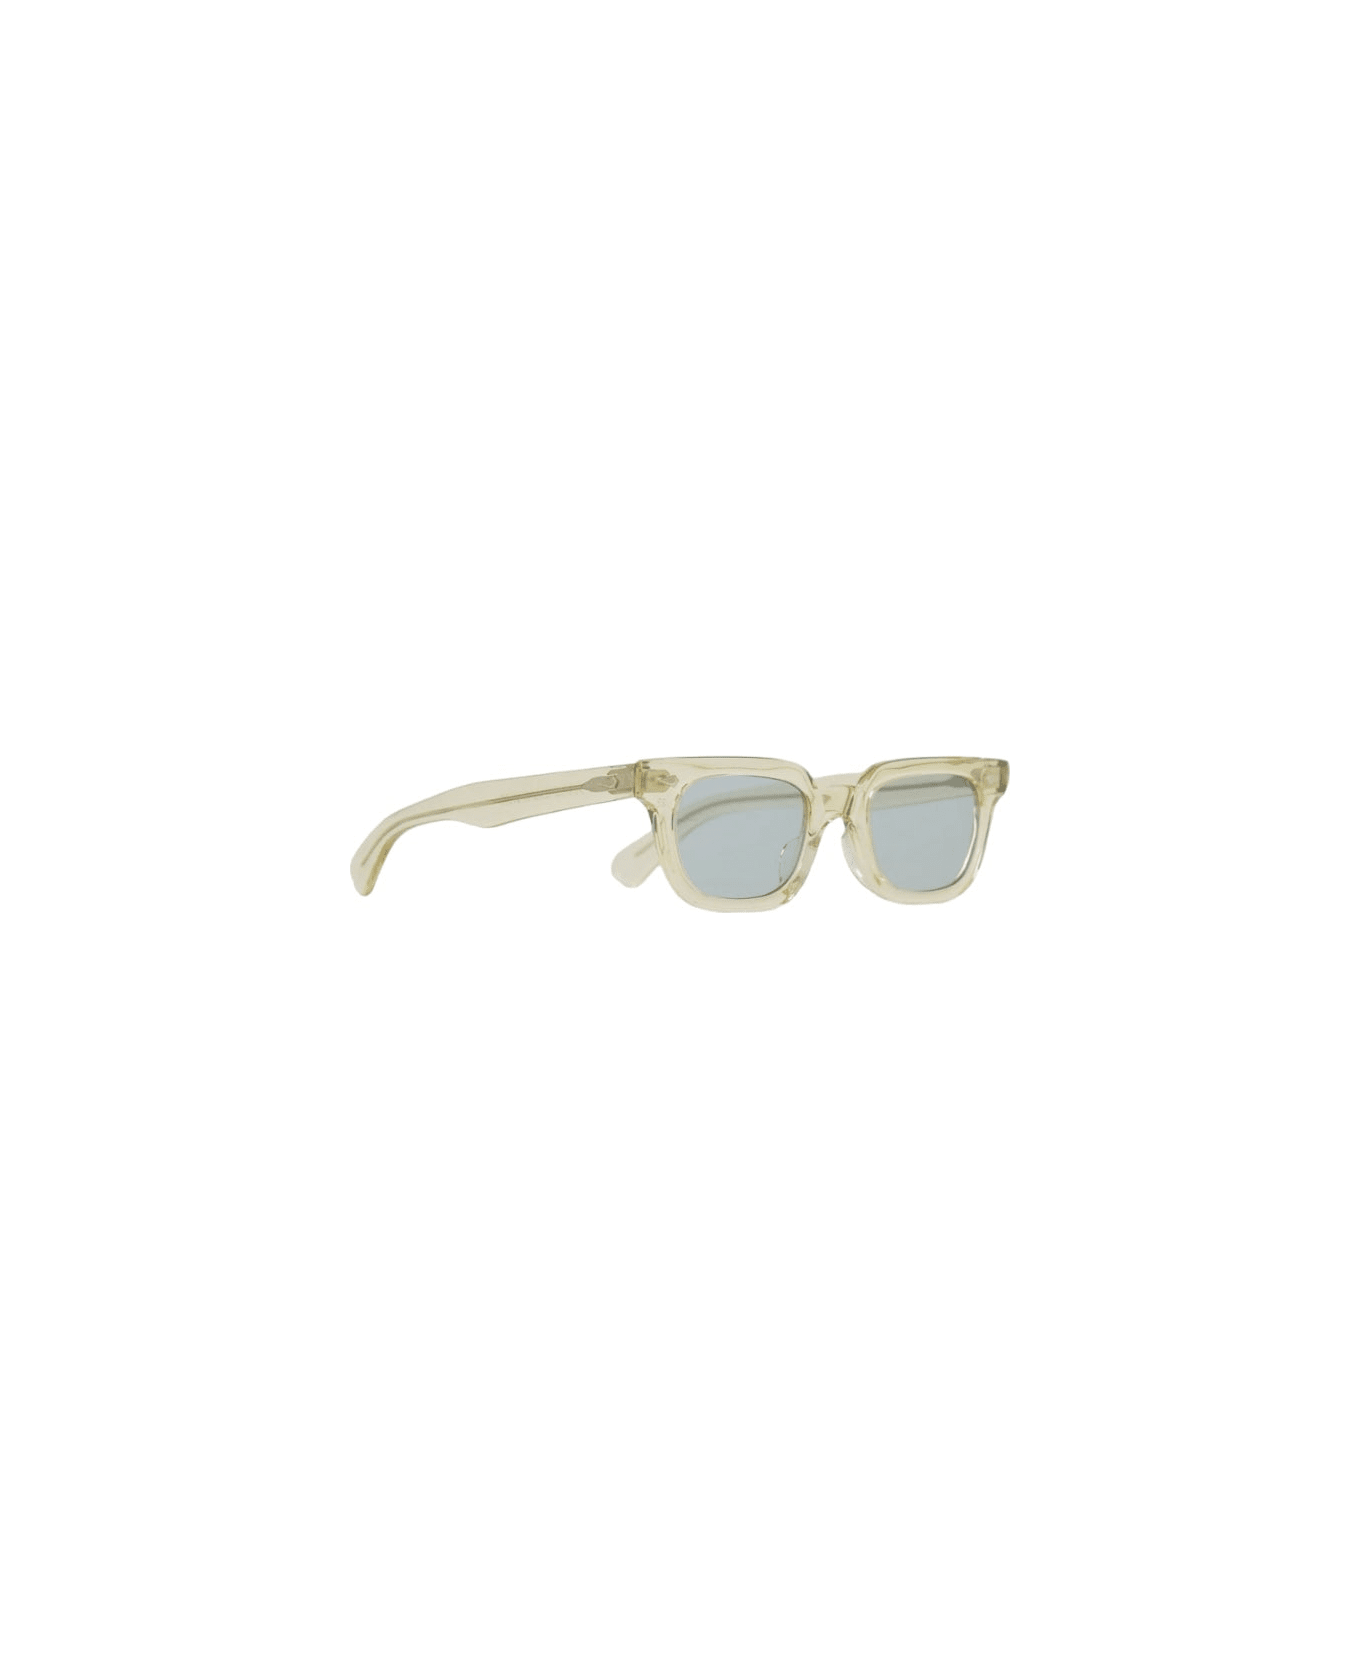 Julius Tart Optical T-man - Champagne Sunglasses